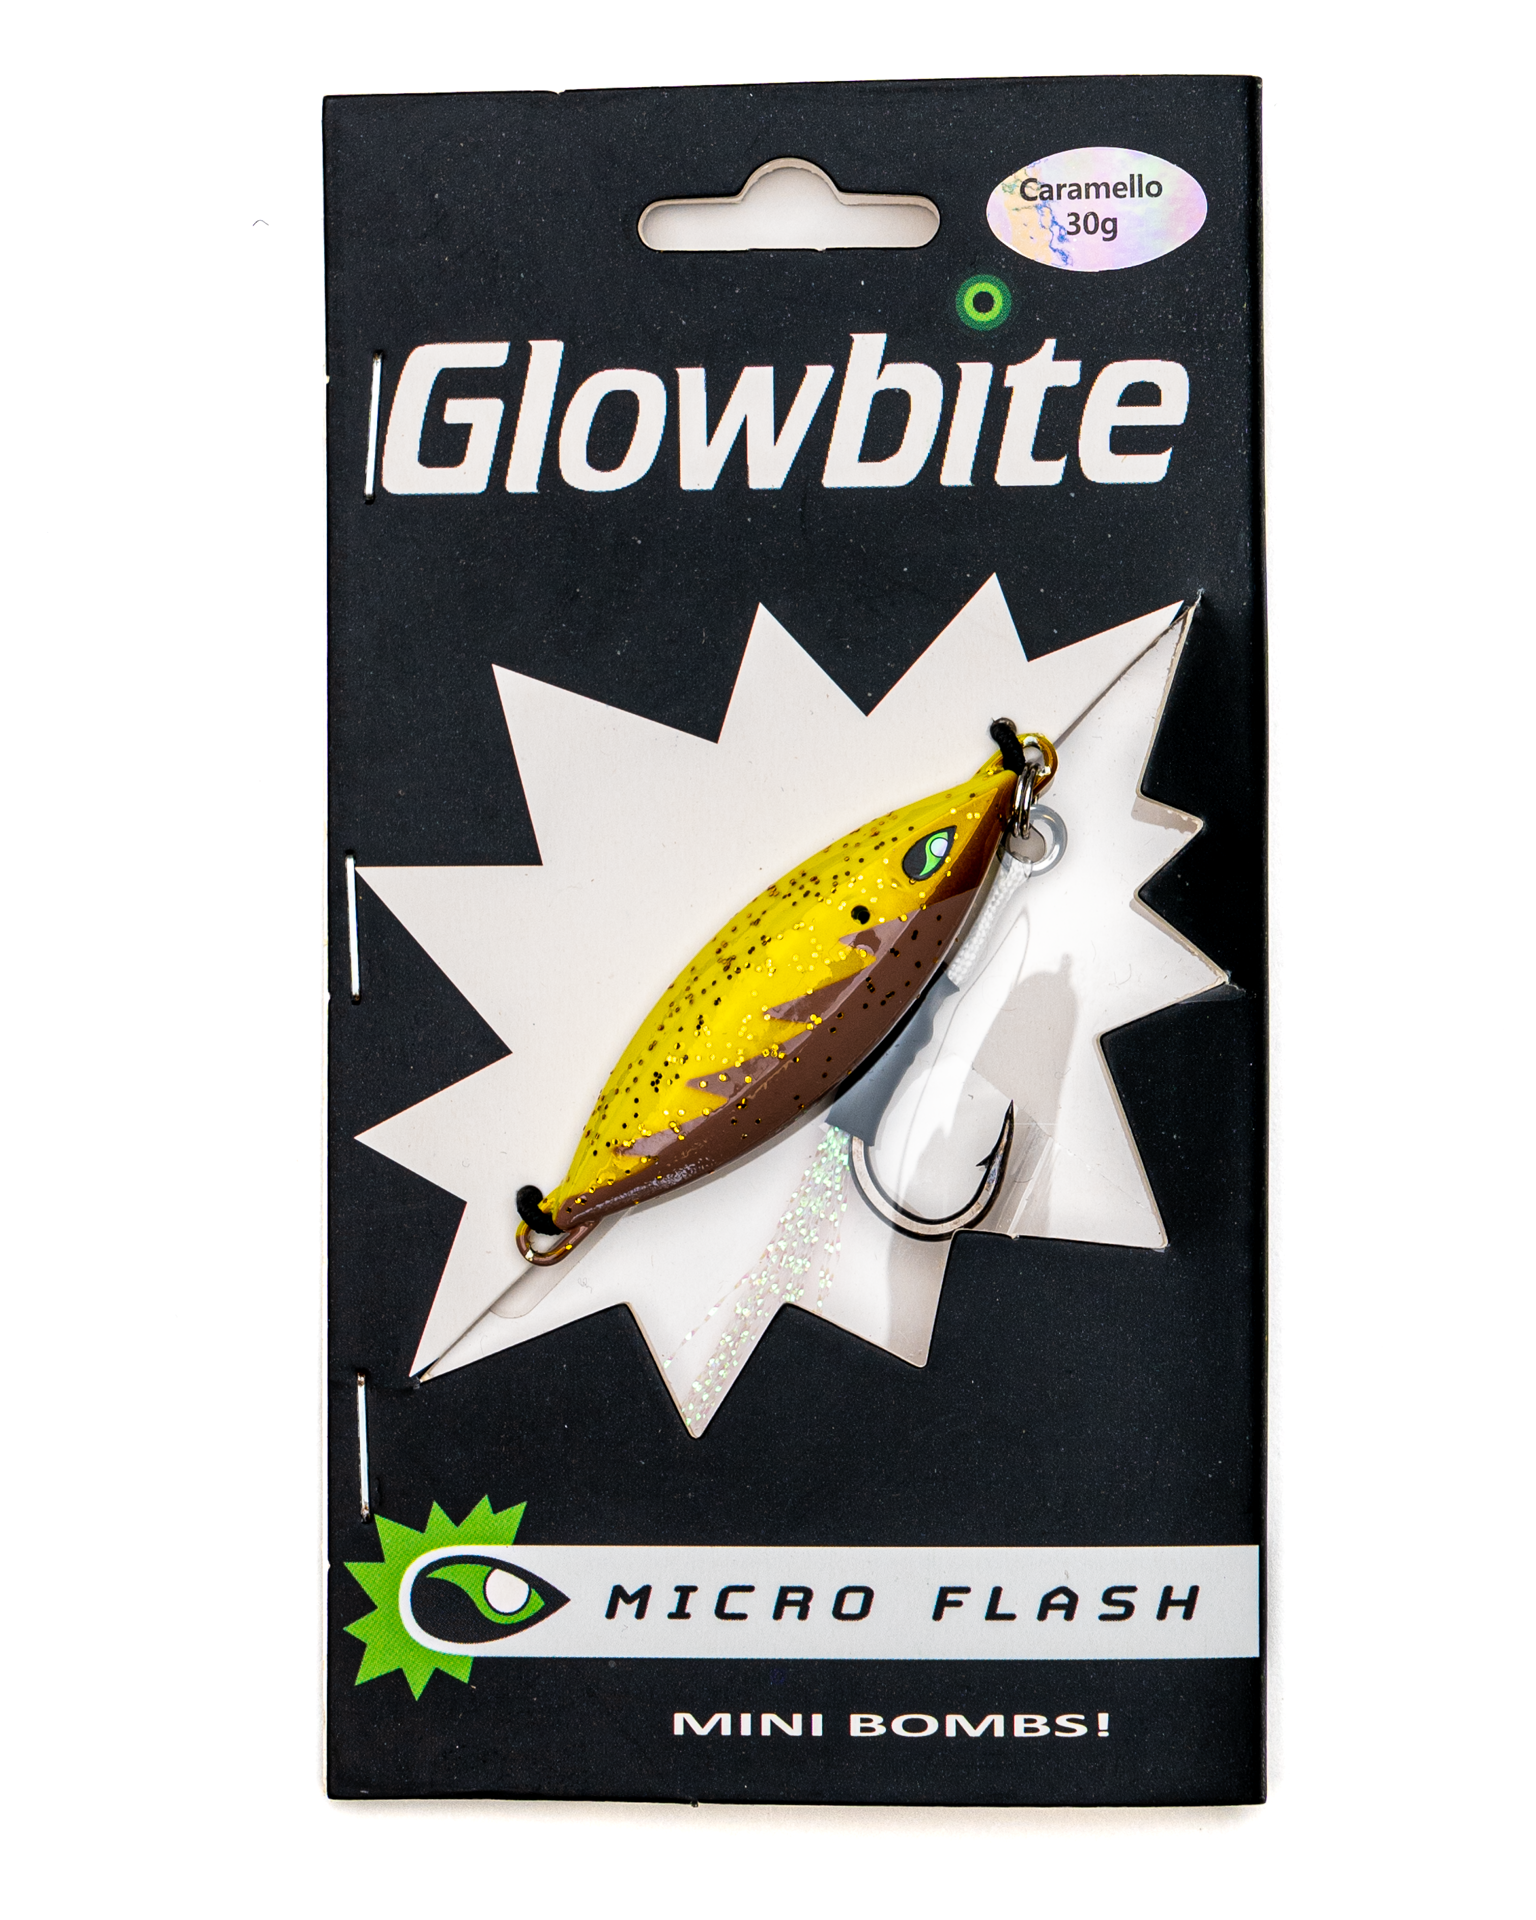 Glowbite Micro Flash – Caramello - 30g